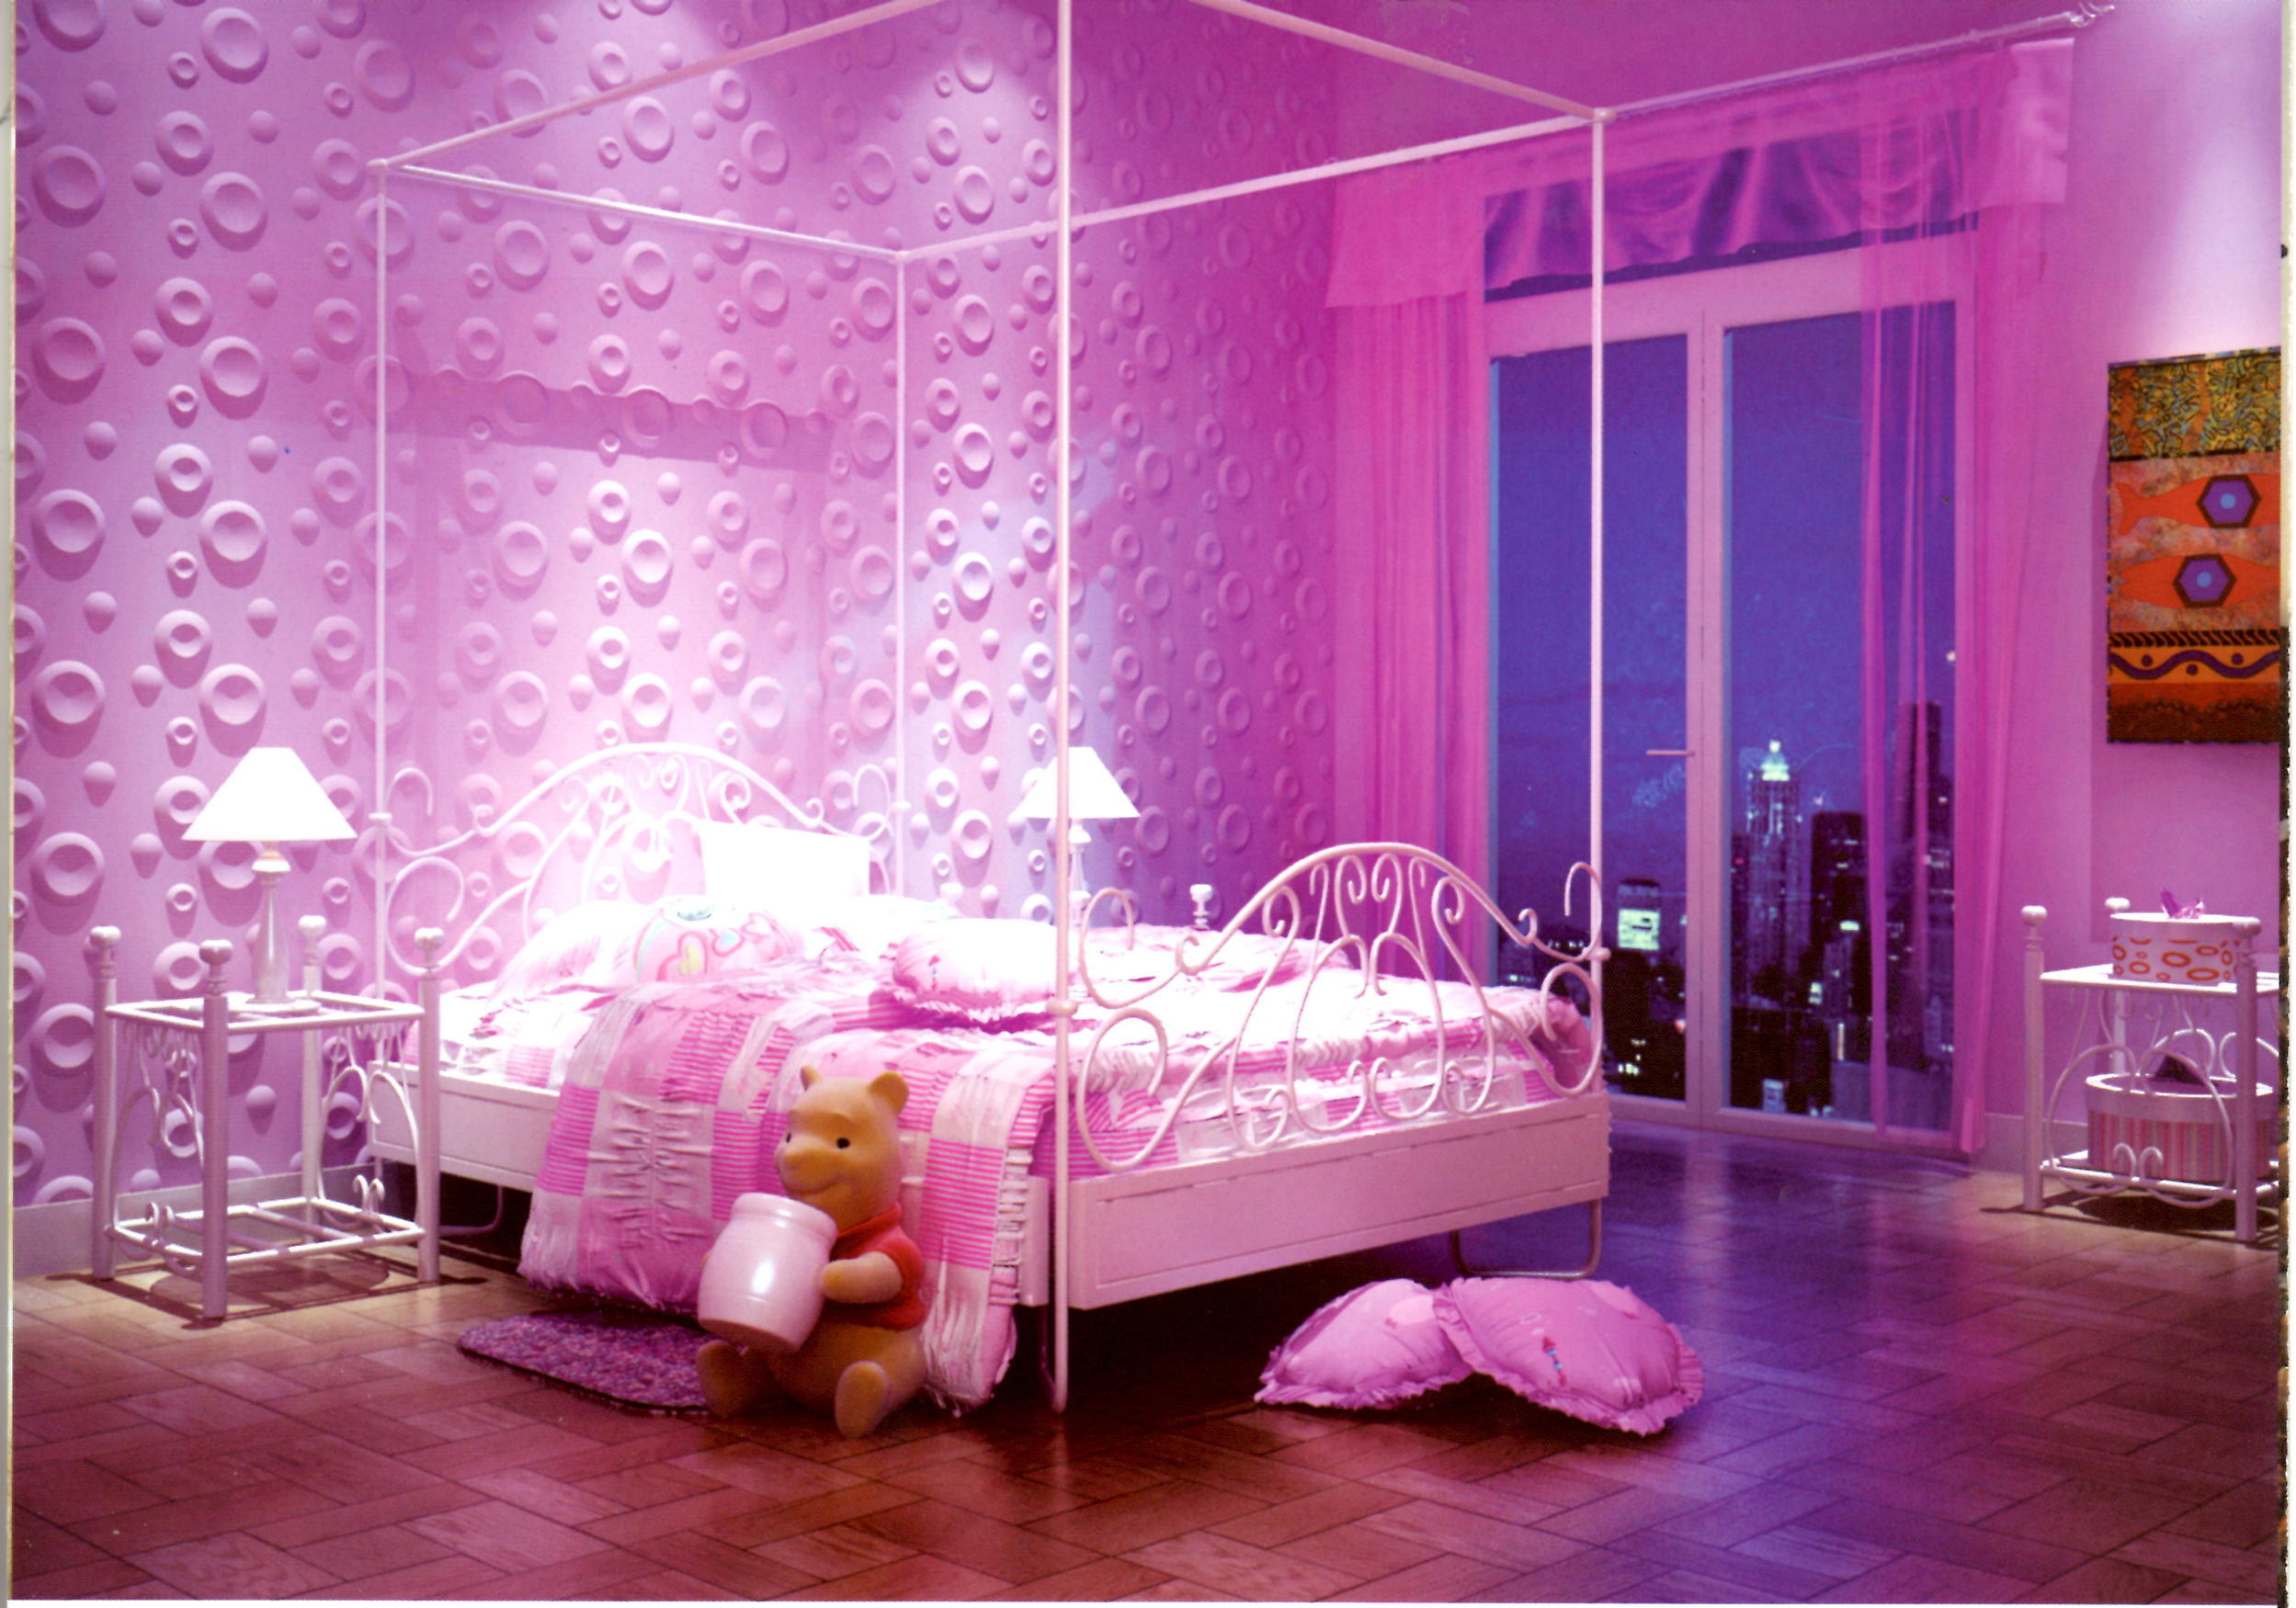 2498x1750 Full Size of Bedroom Vinyl Wallpaper Wallpaper Decor Wallpaper Shops  Wallpaper For Bedroom Wall With Pink ...